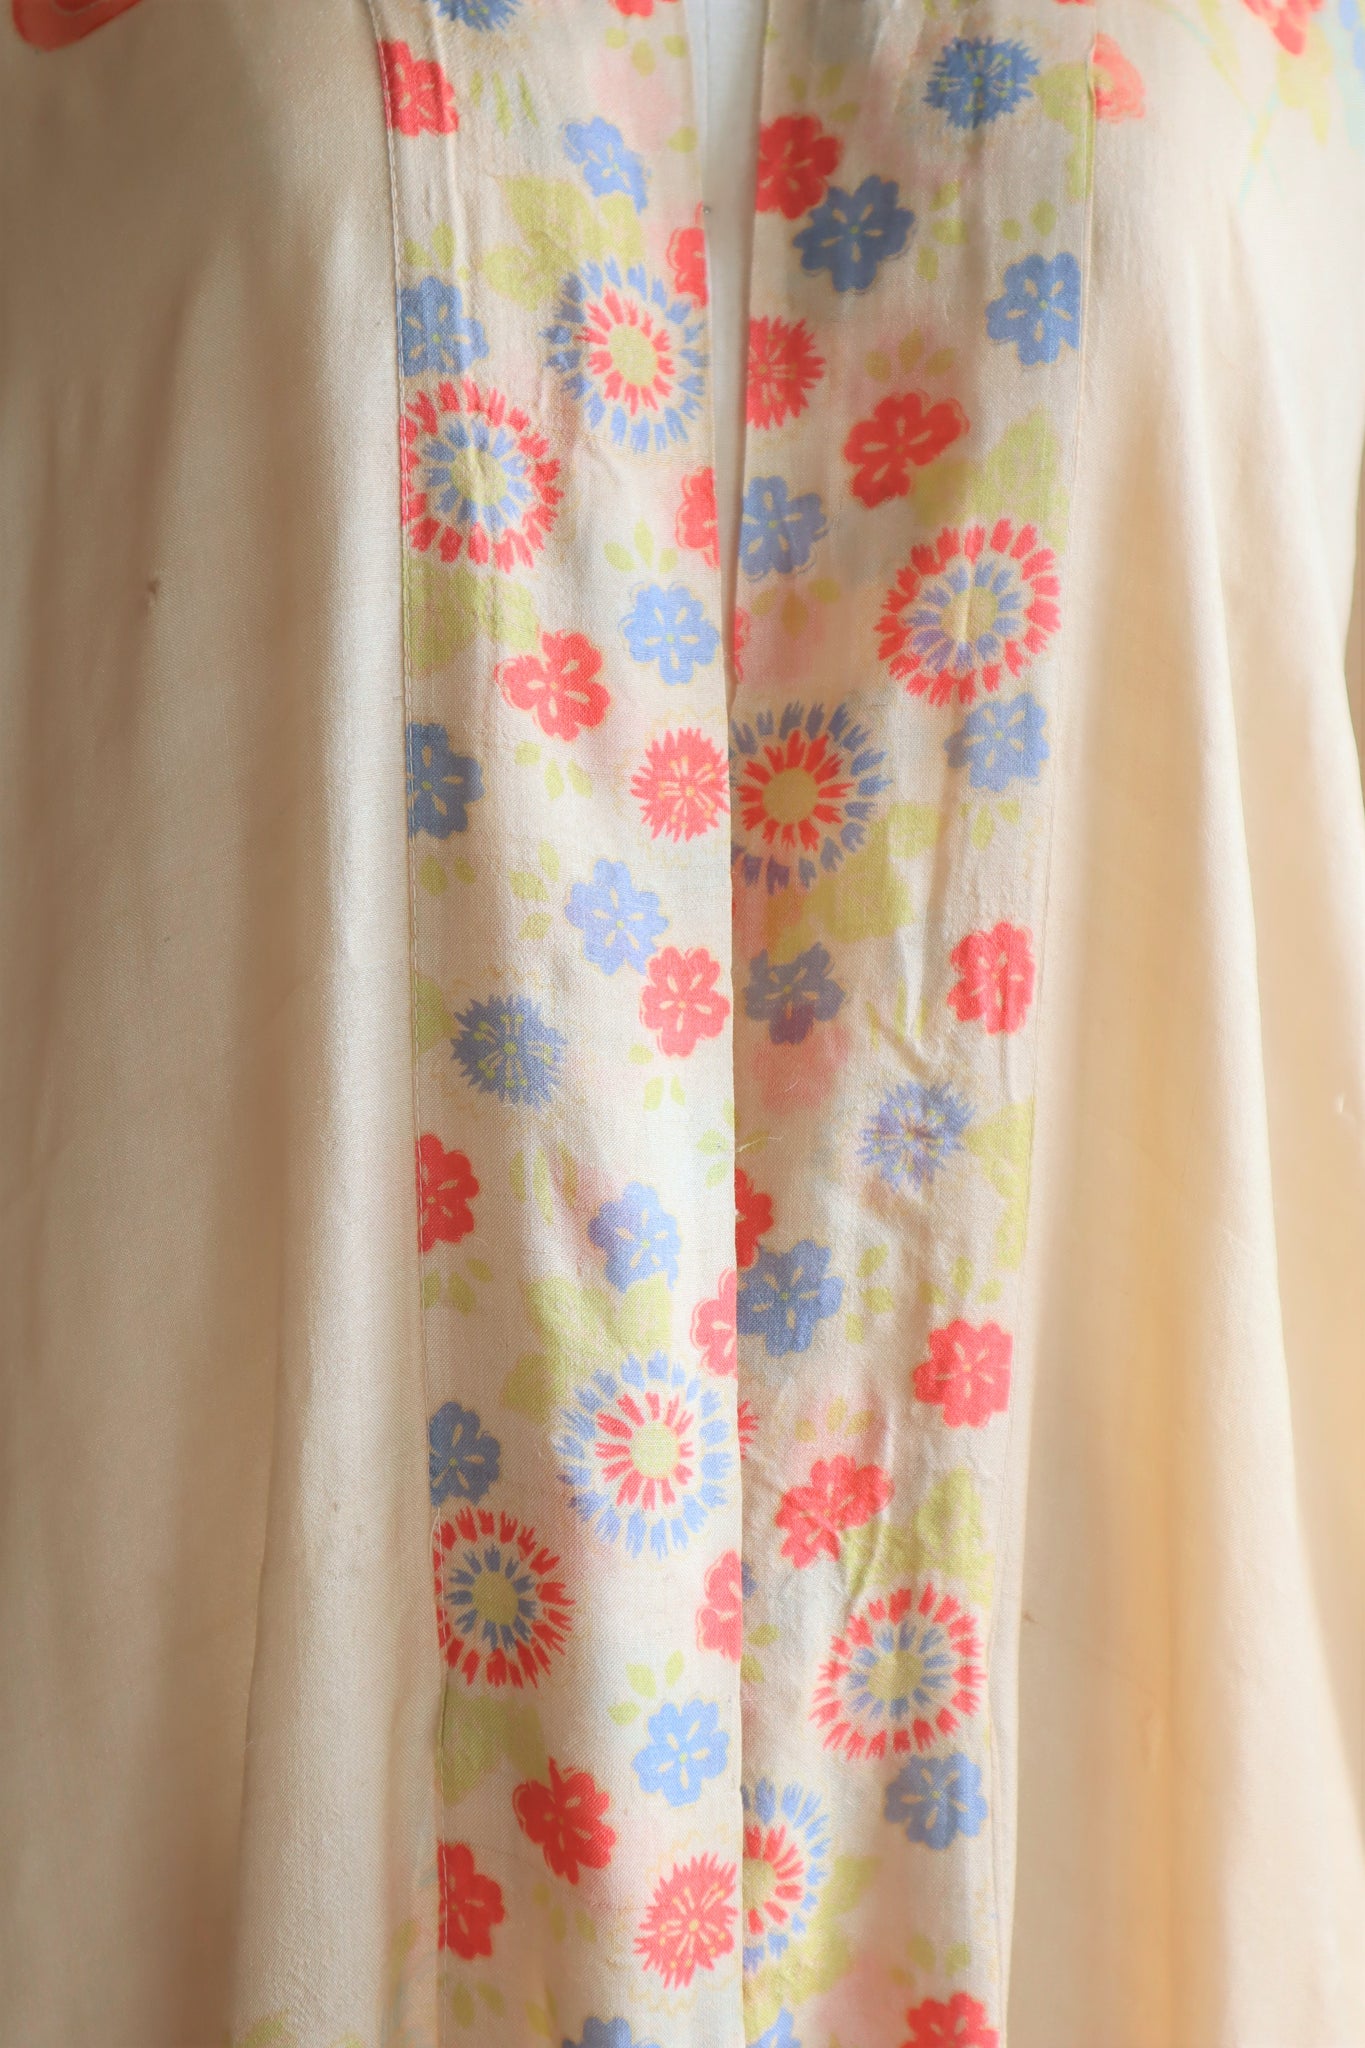 1920s Rare Pongee Silk Robe